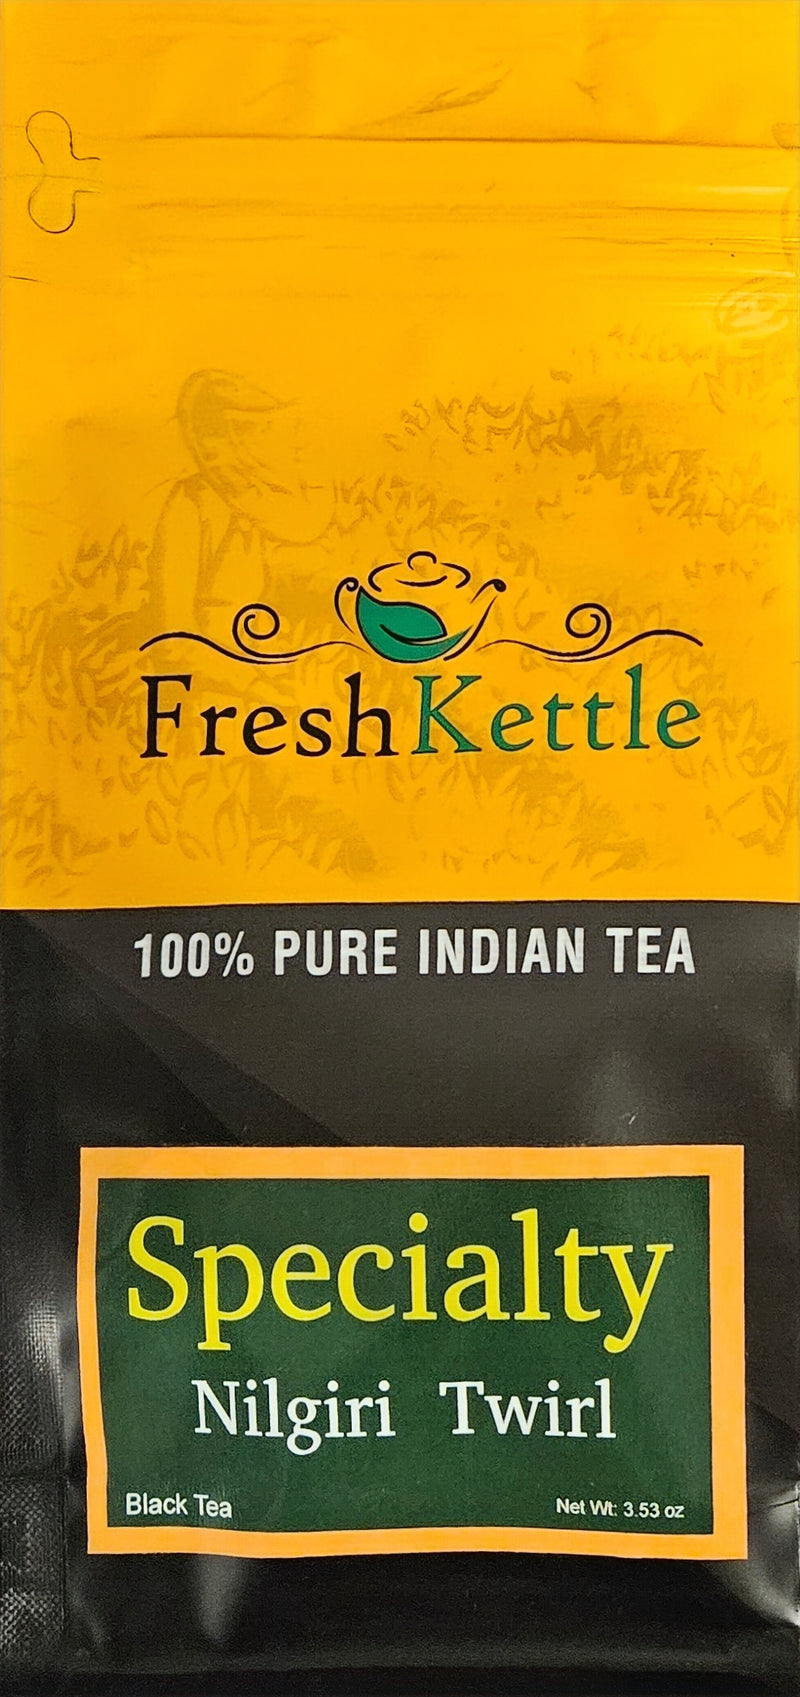 Specialty Nilgiri Twirl Black Tea